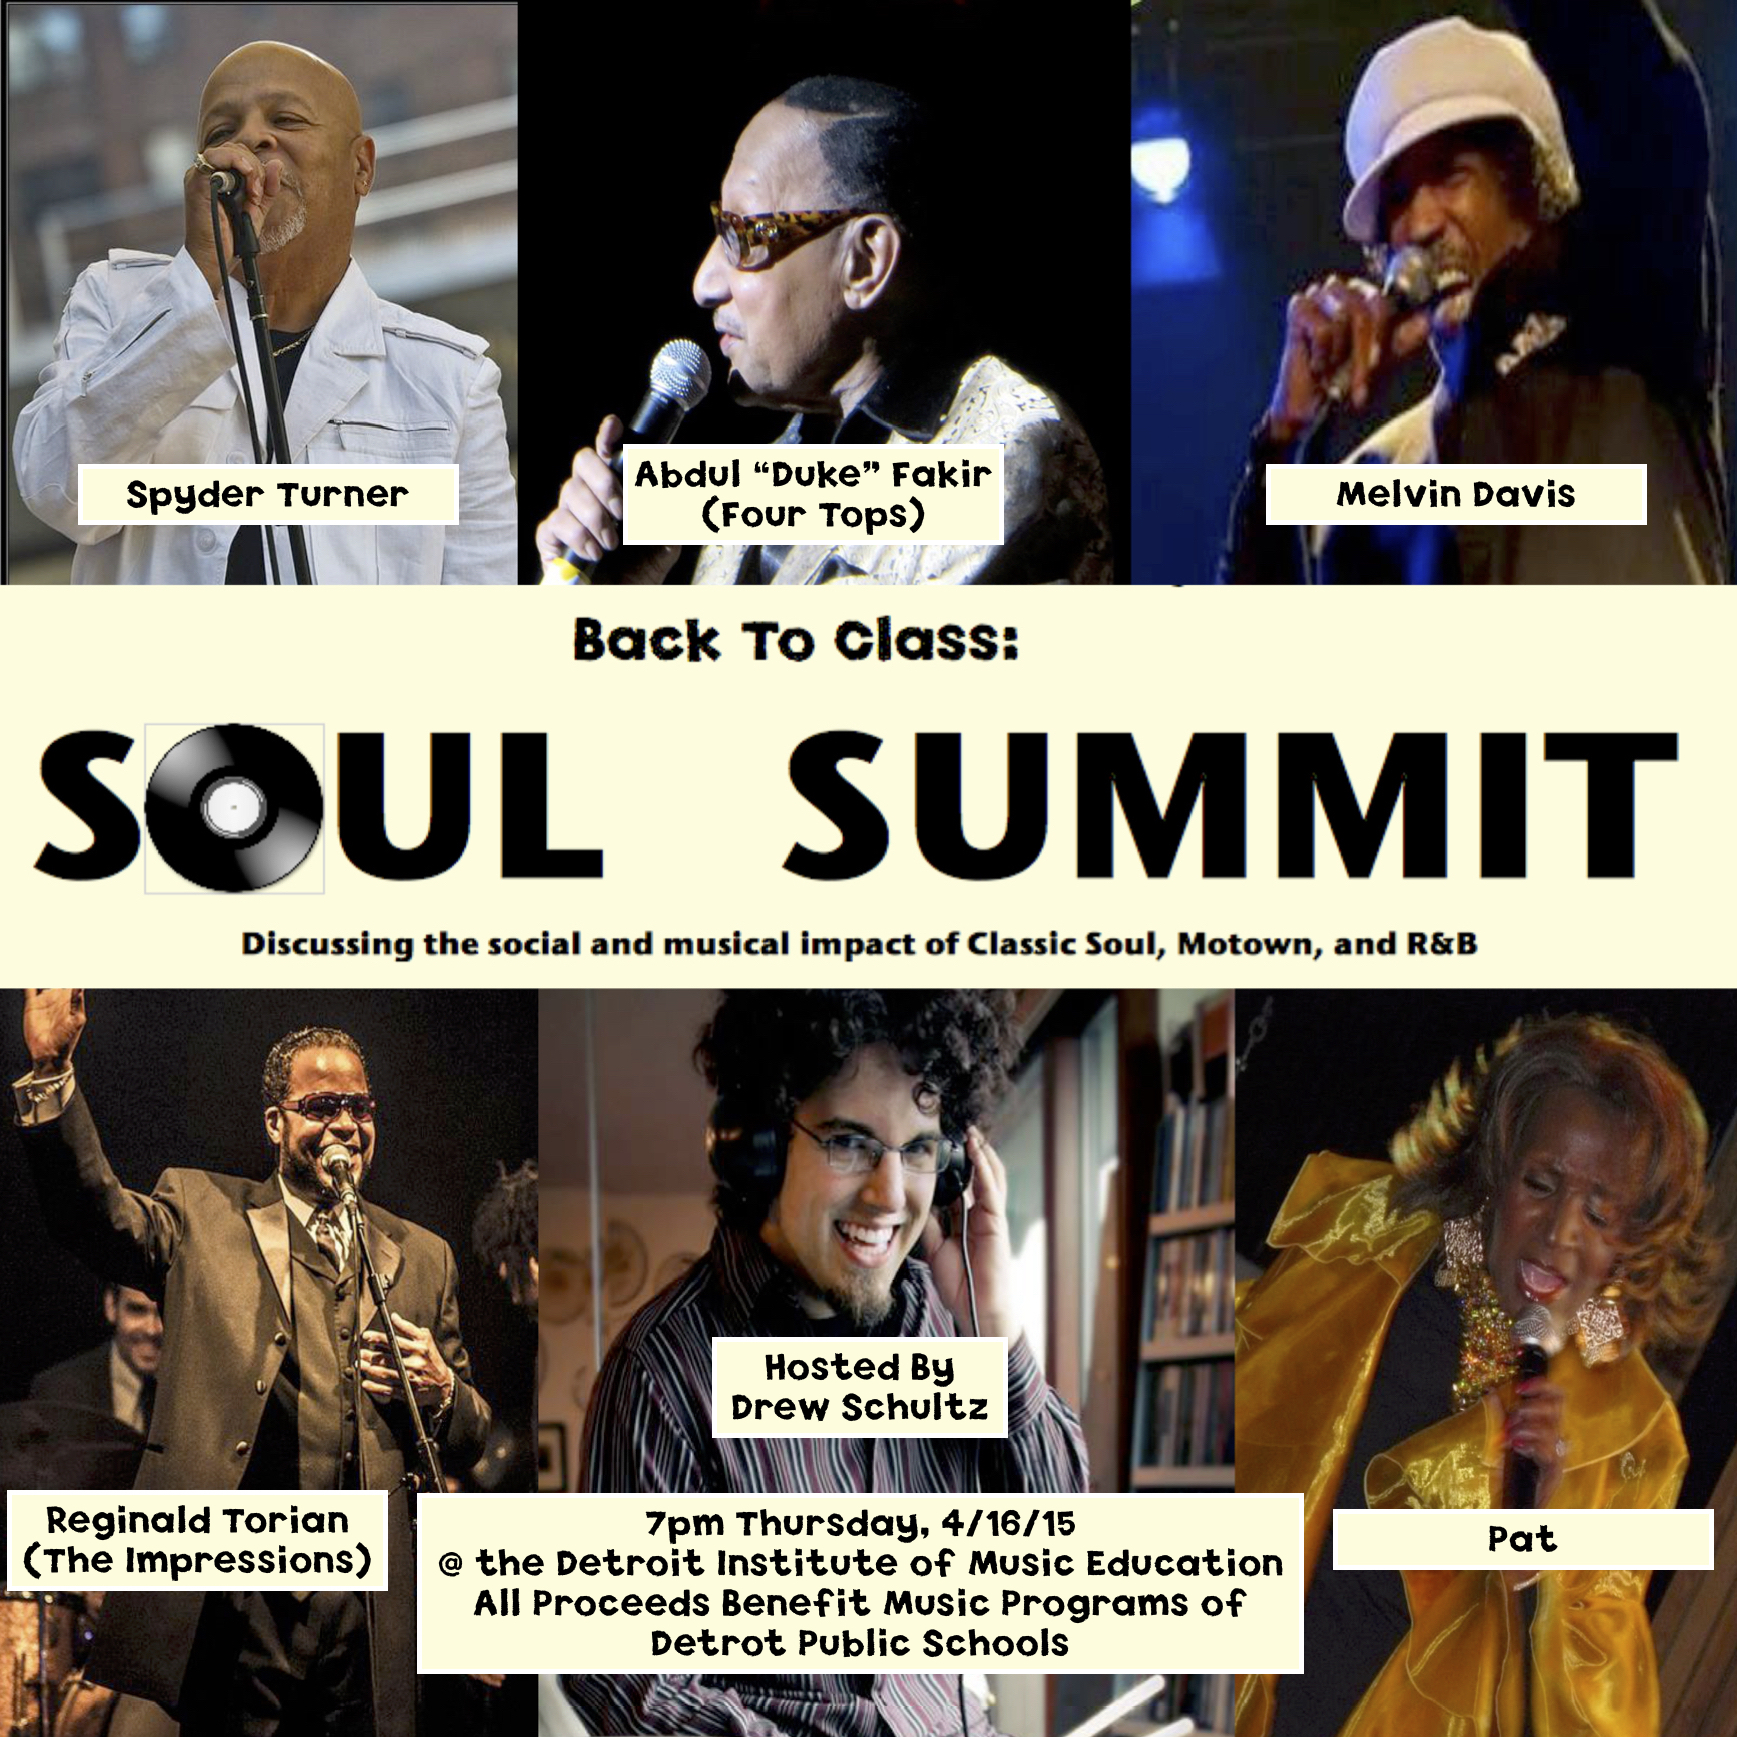 soul-summit-image-info